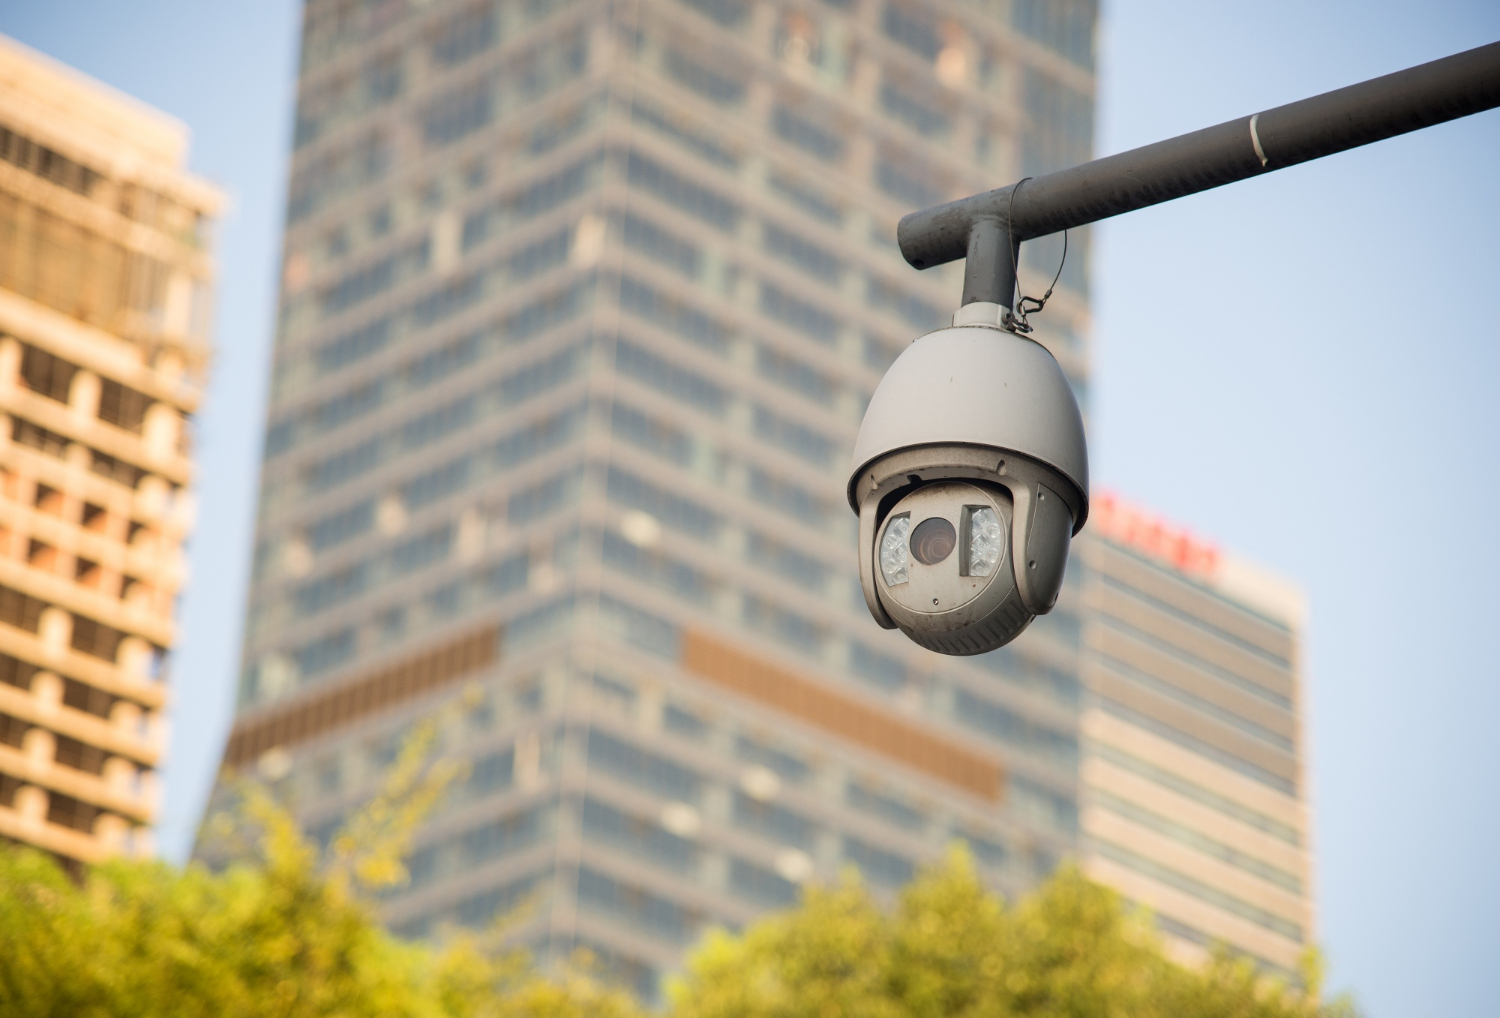 CCTV cameras at construction sites